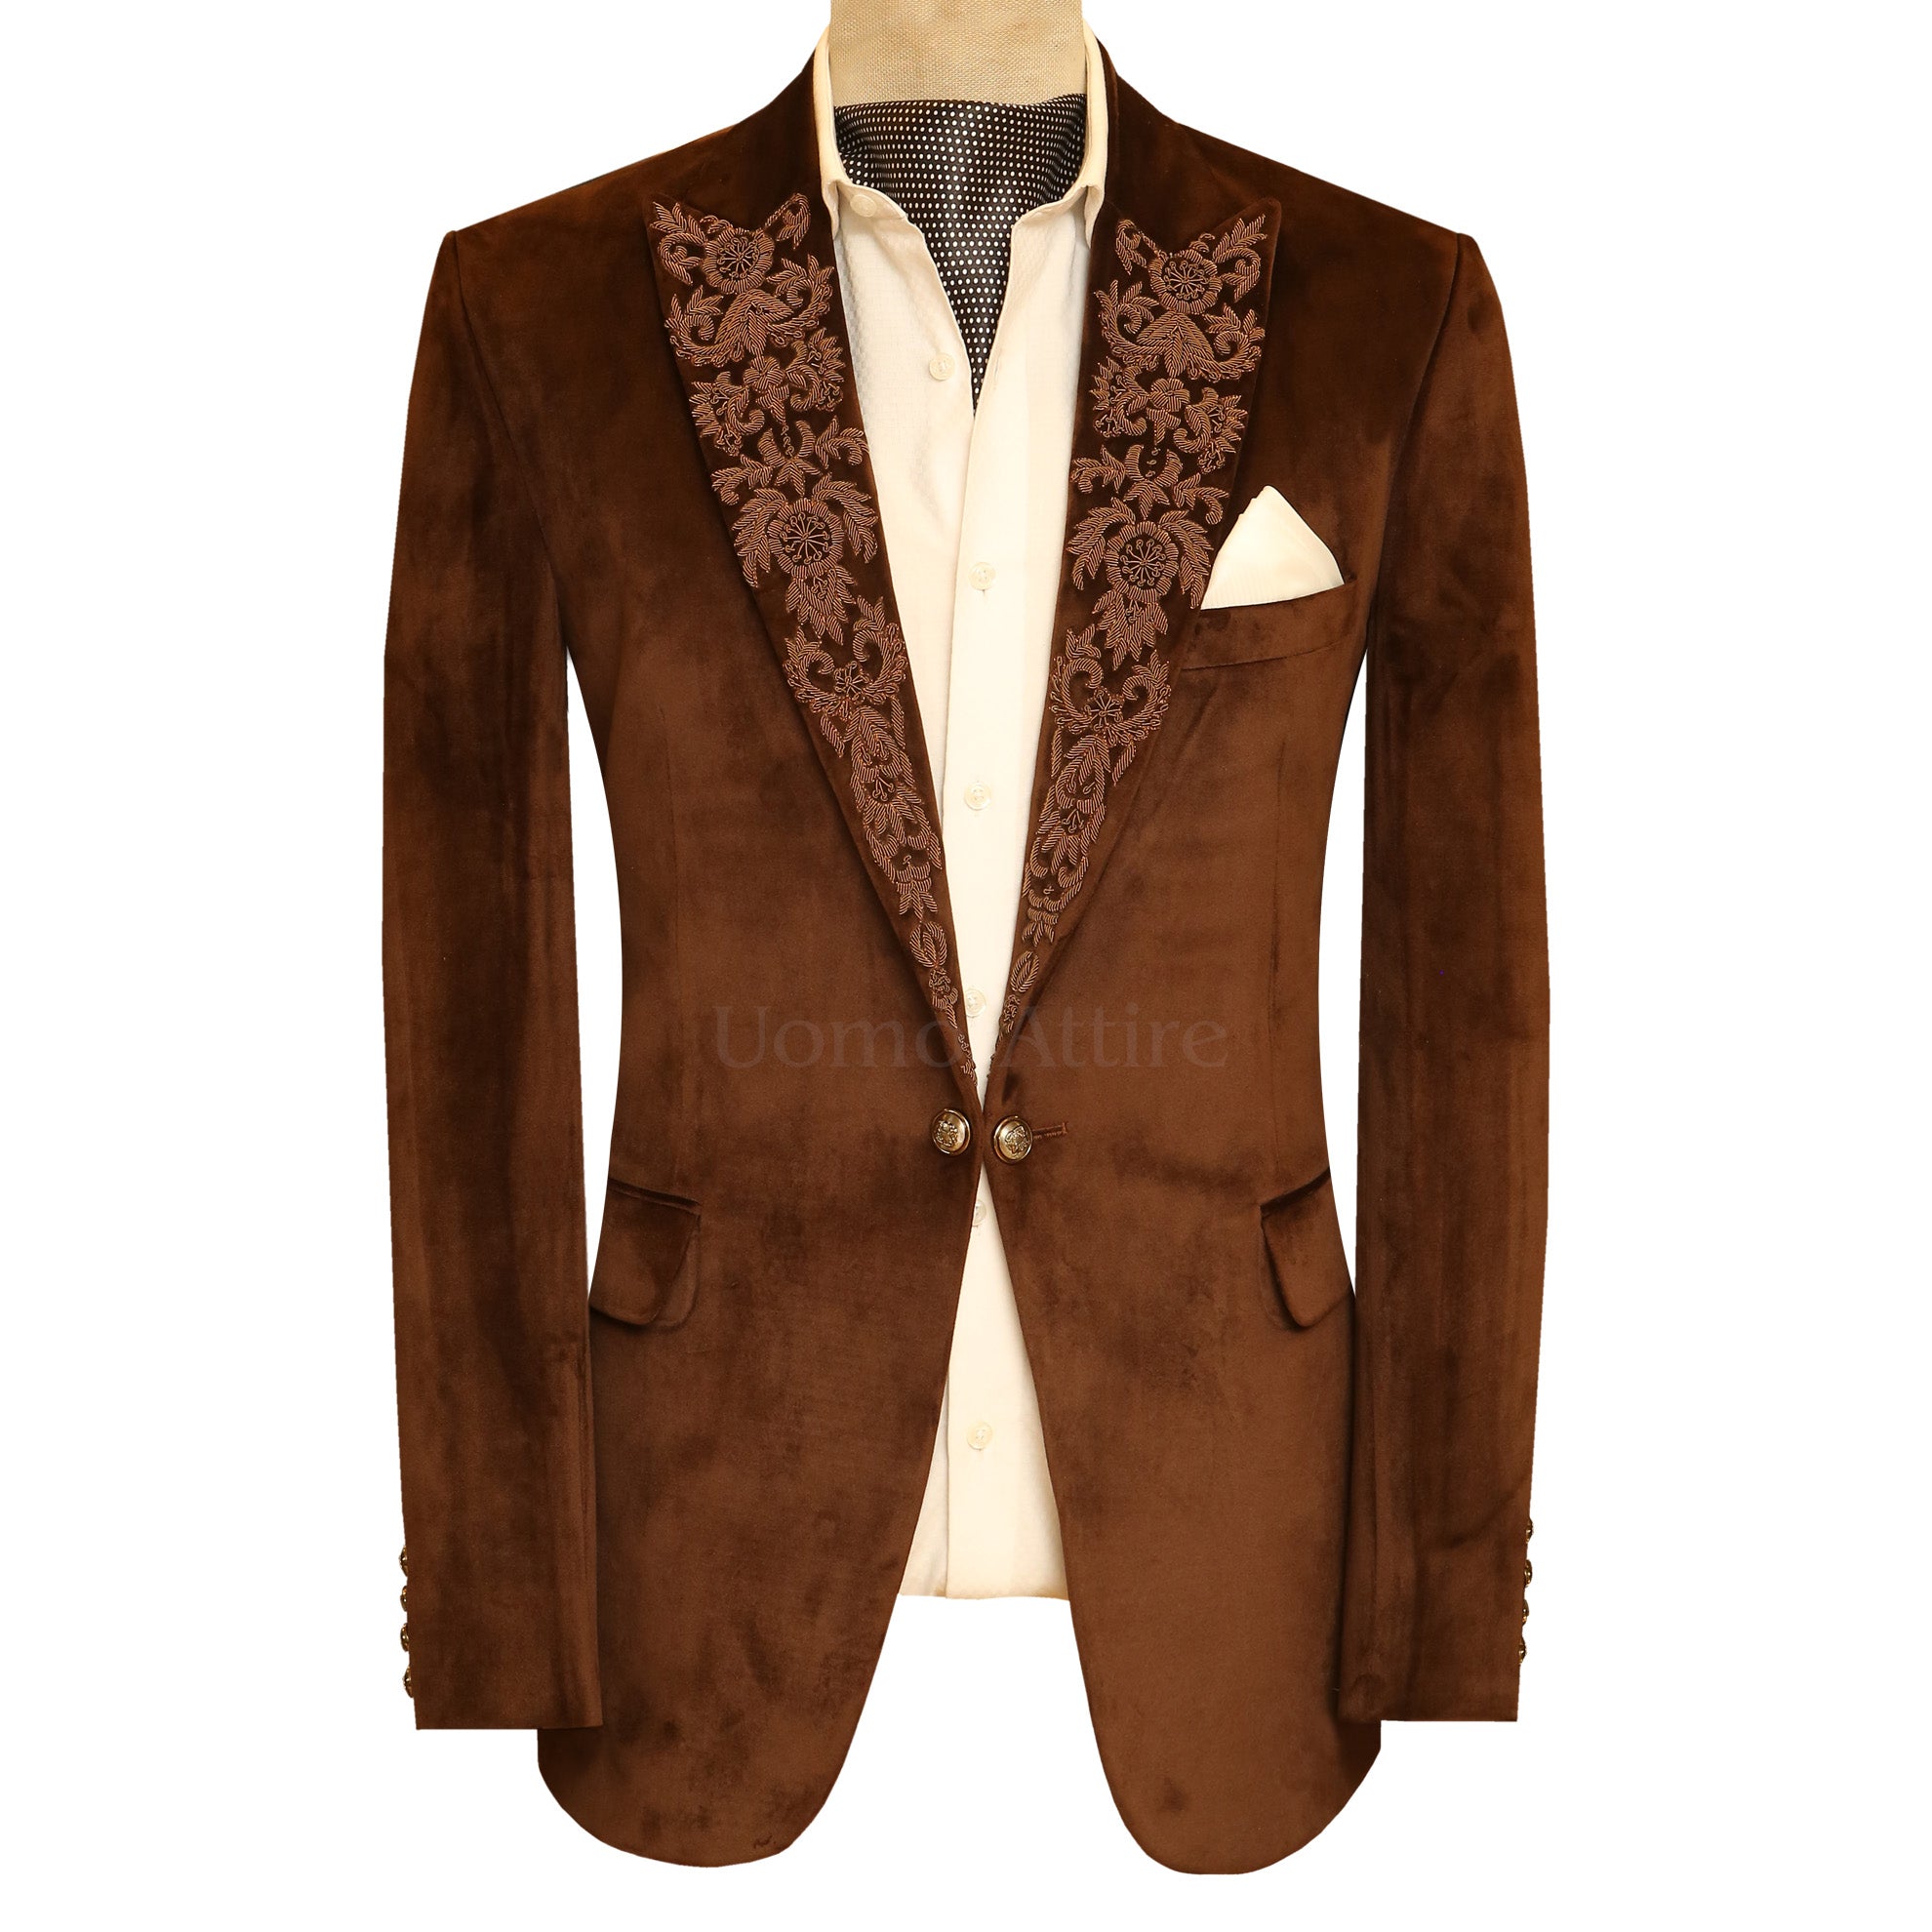 Brown Velvet Tuxedo Jacket with Floral Hand Jewlery Work – Uomo Attire